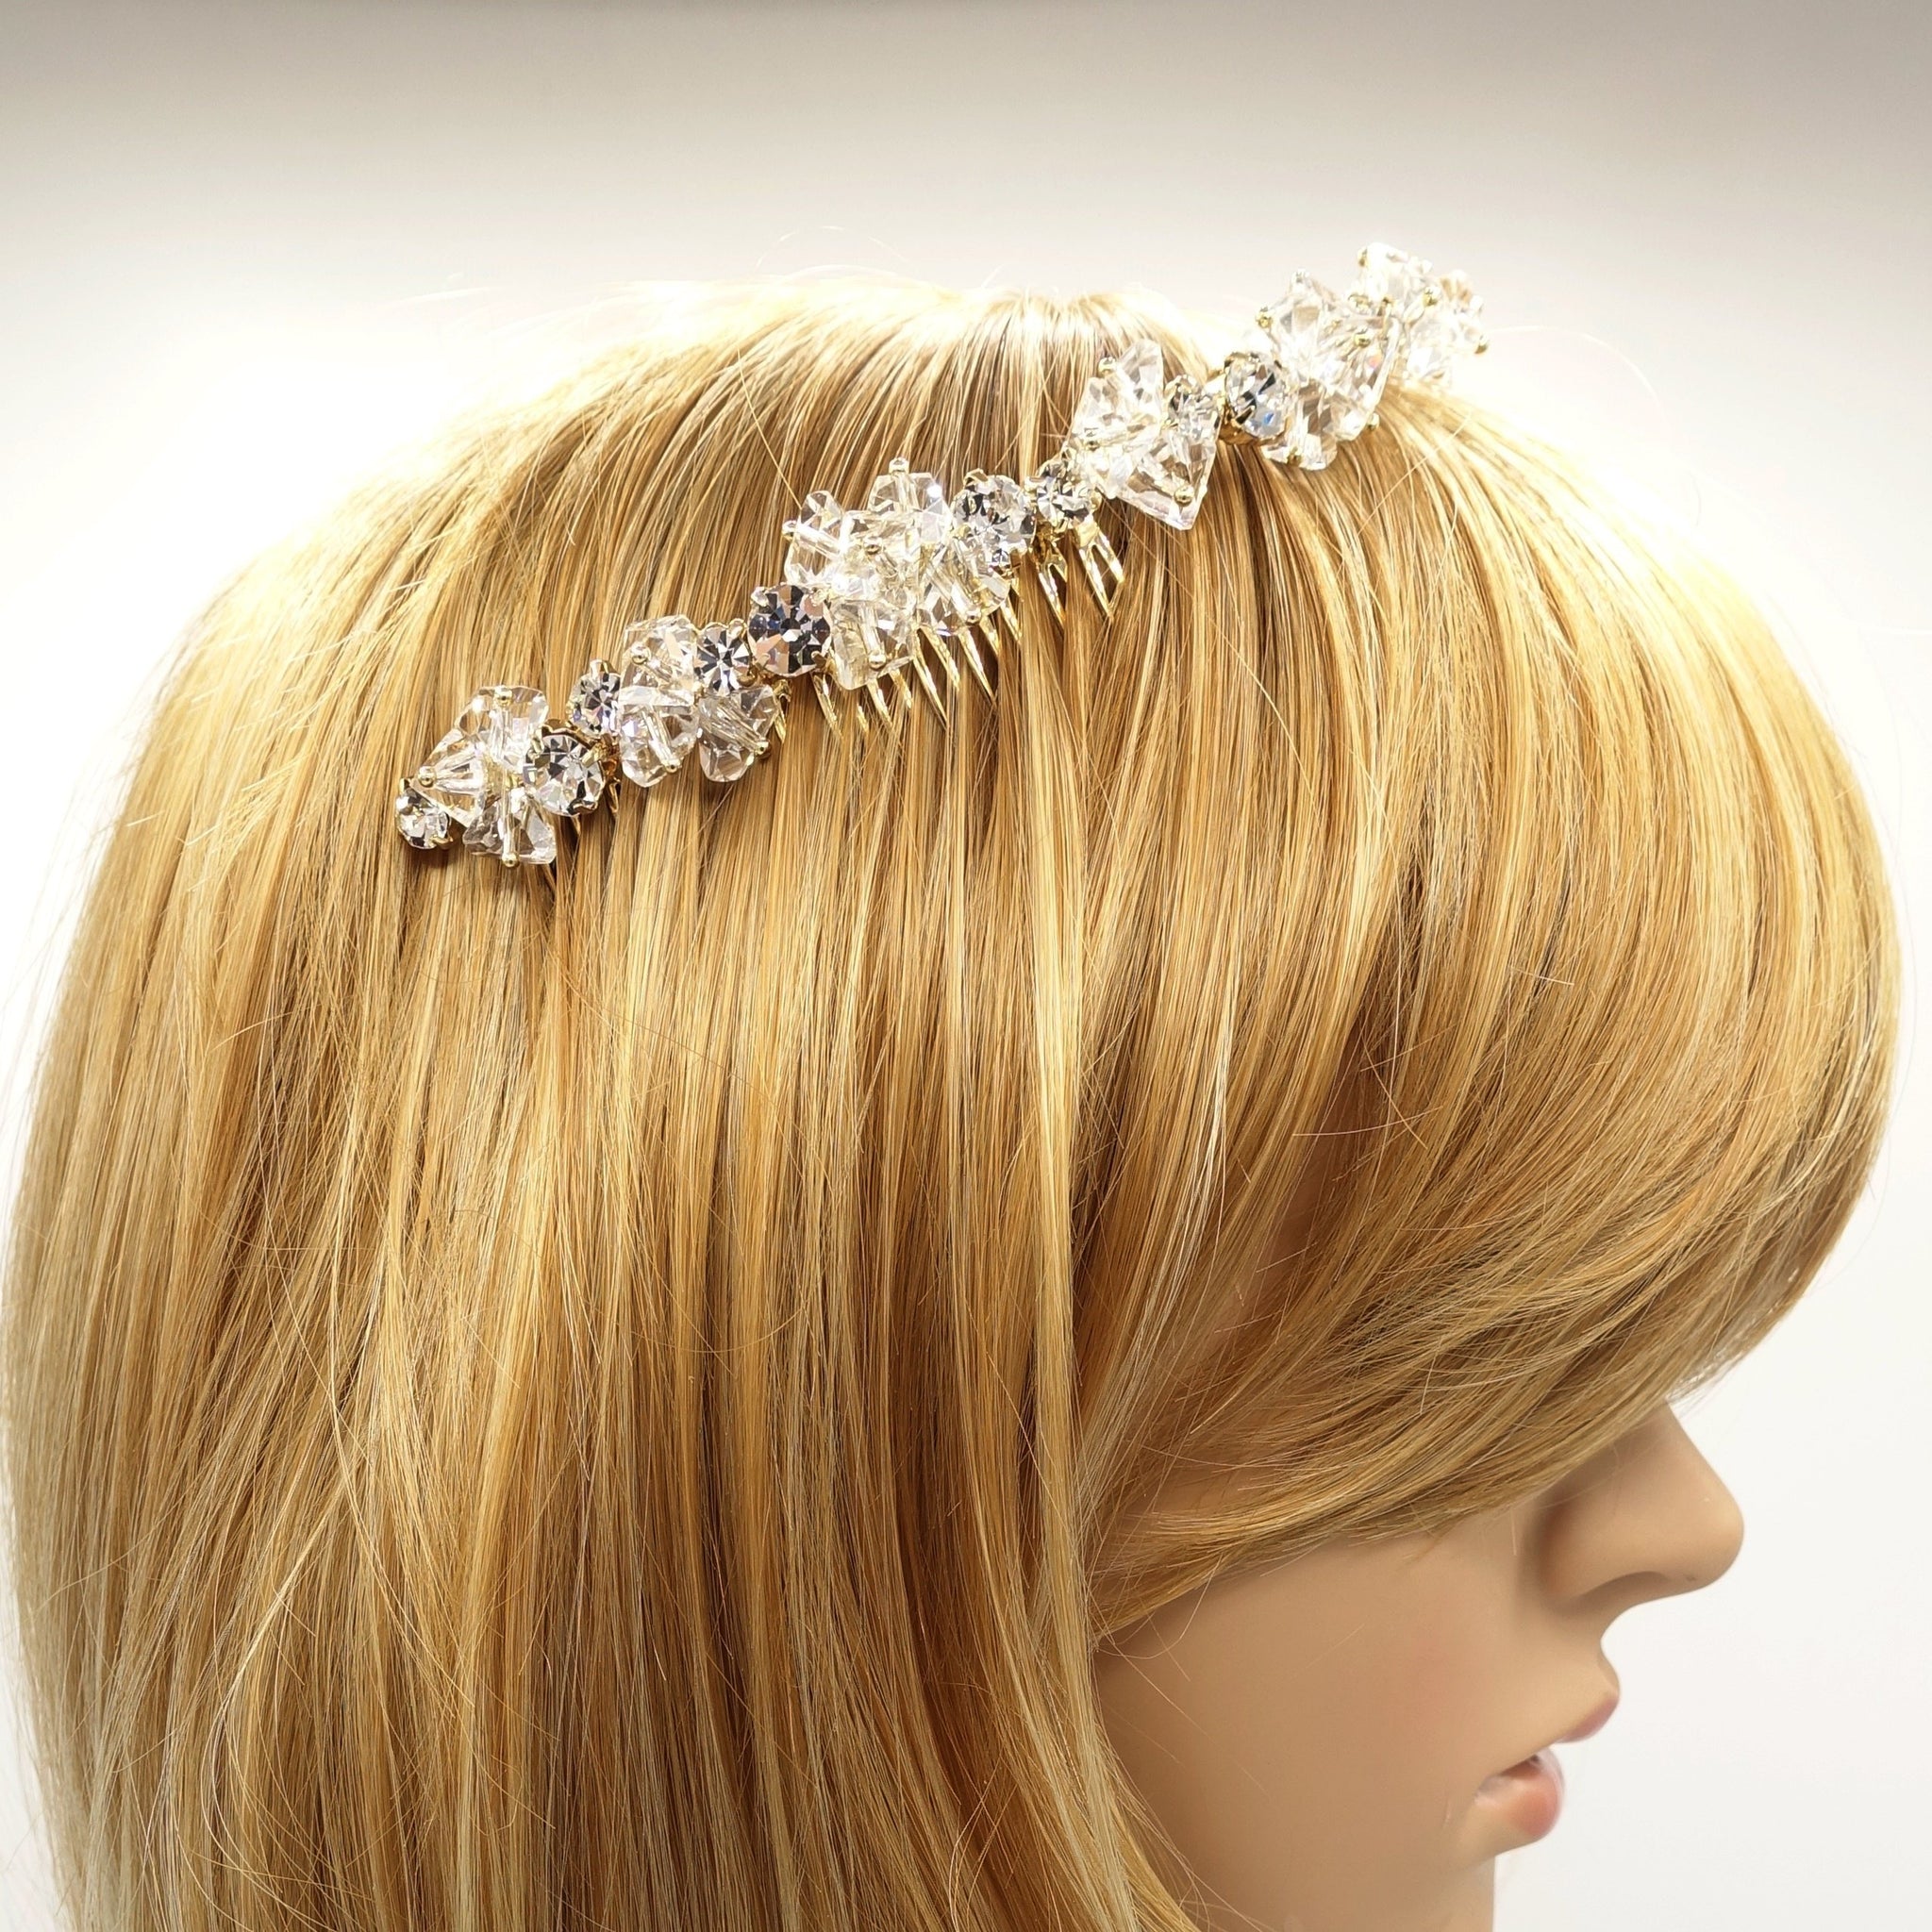 VeryShine bridal comb tiara wedding crown event hair accessory for women